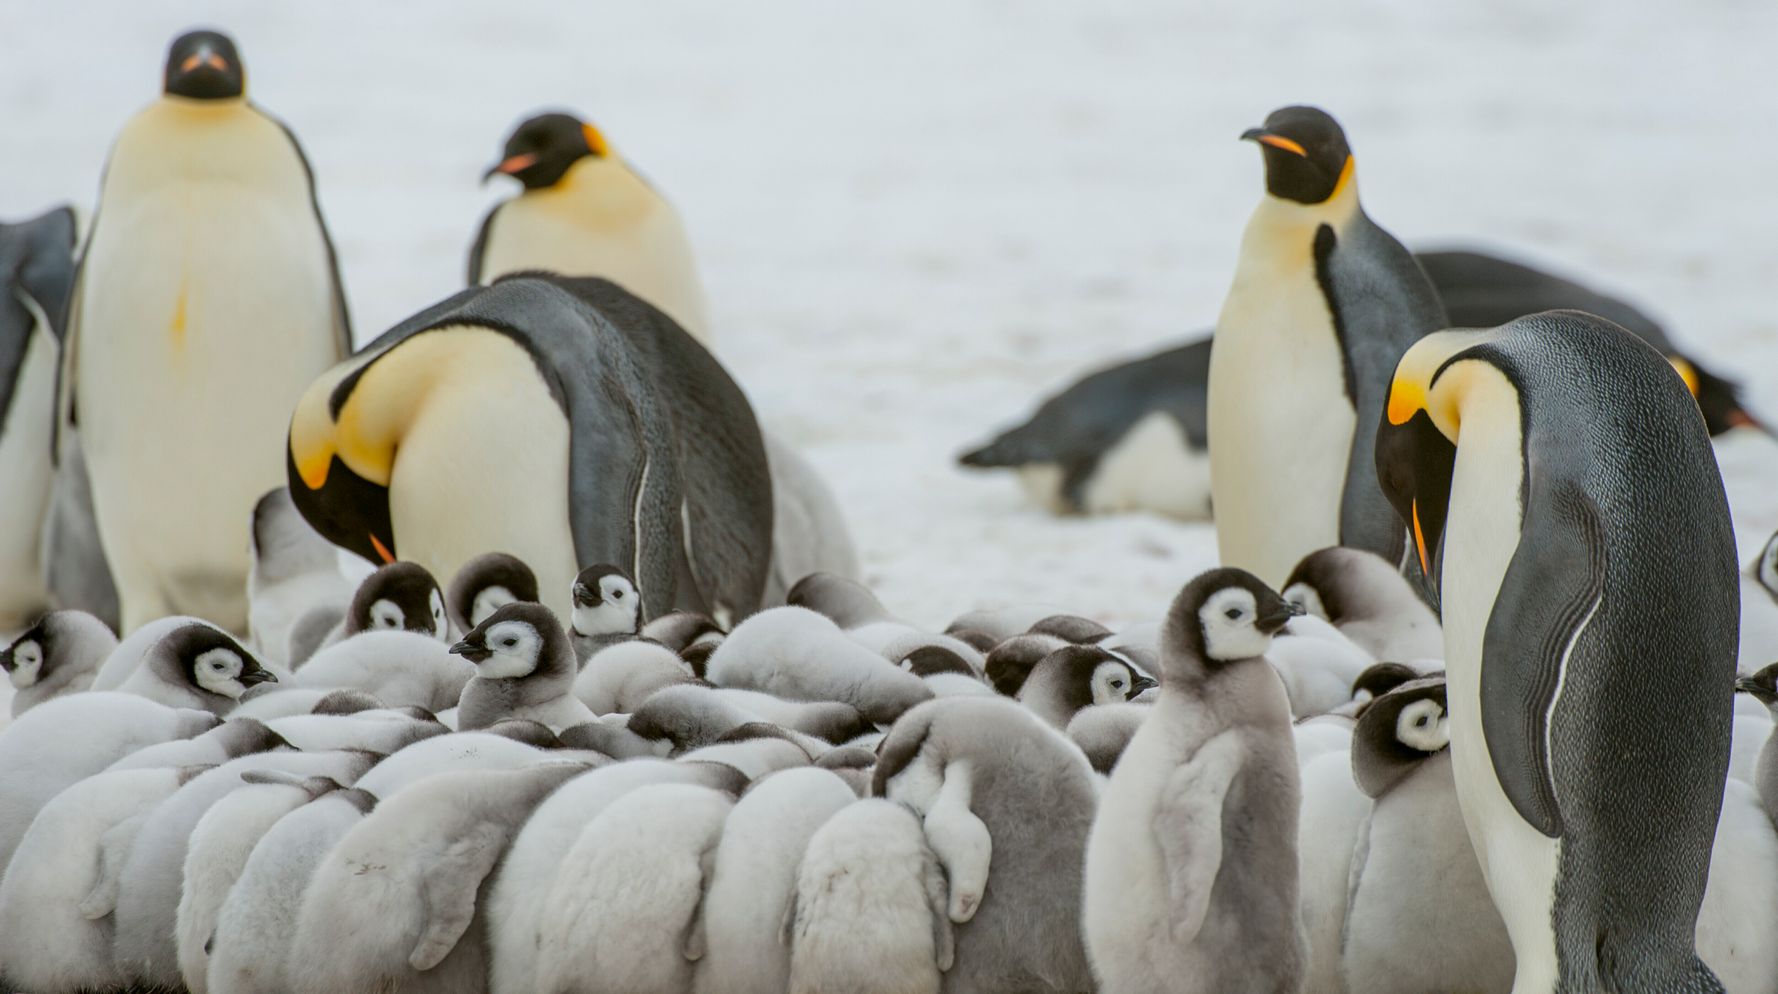 Emperor Penguin Colonies Face Extinction Due To Climate Change, U.S. Officials Say